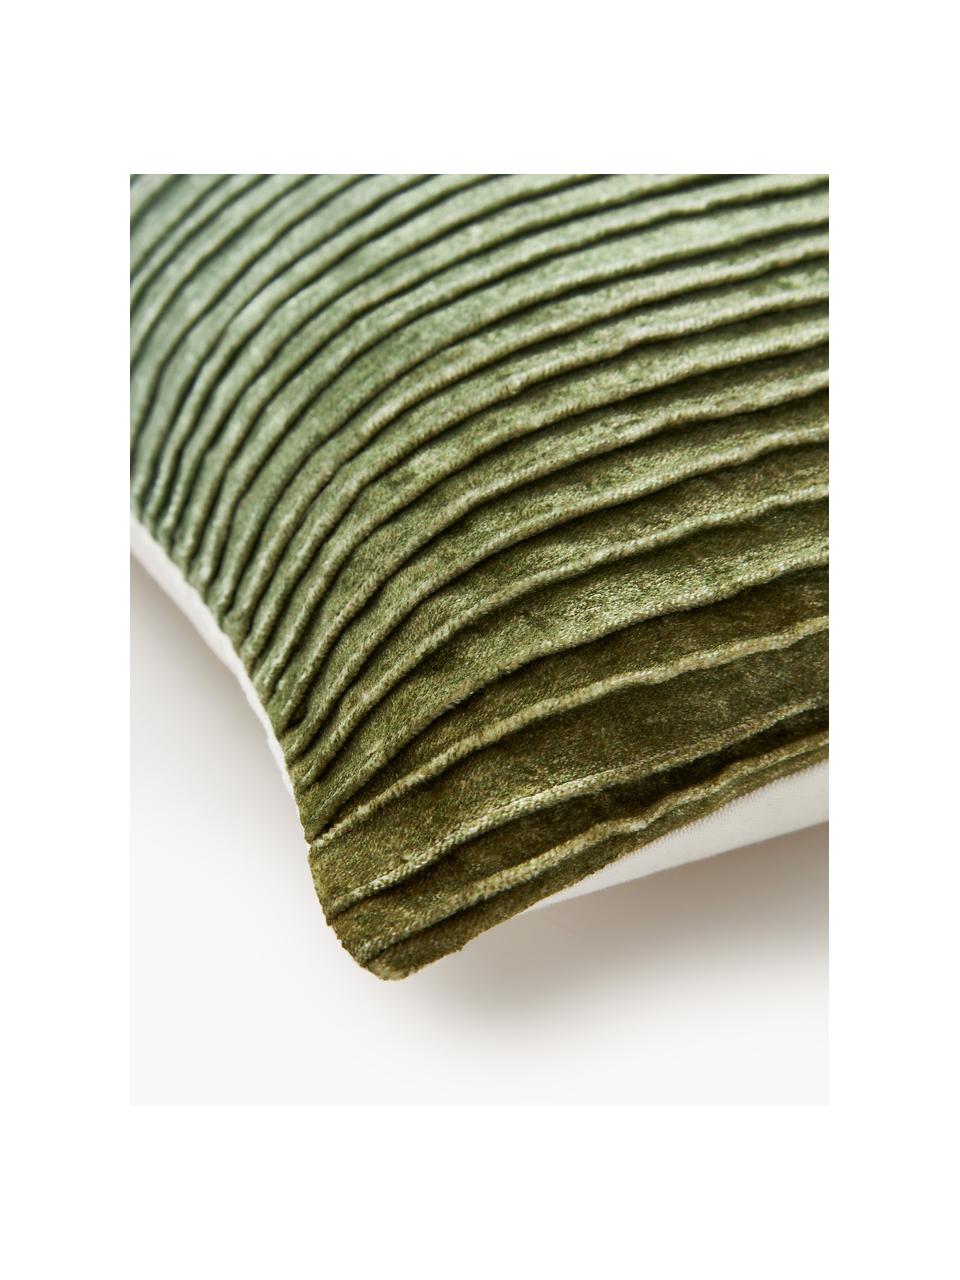 Kussenhoes Hattie met geborduurd patroon, Groen, B 45 x L 45 cm